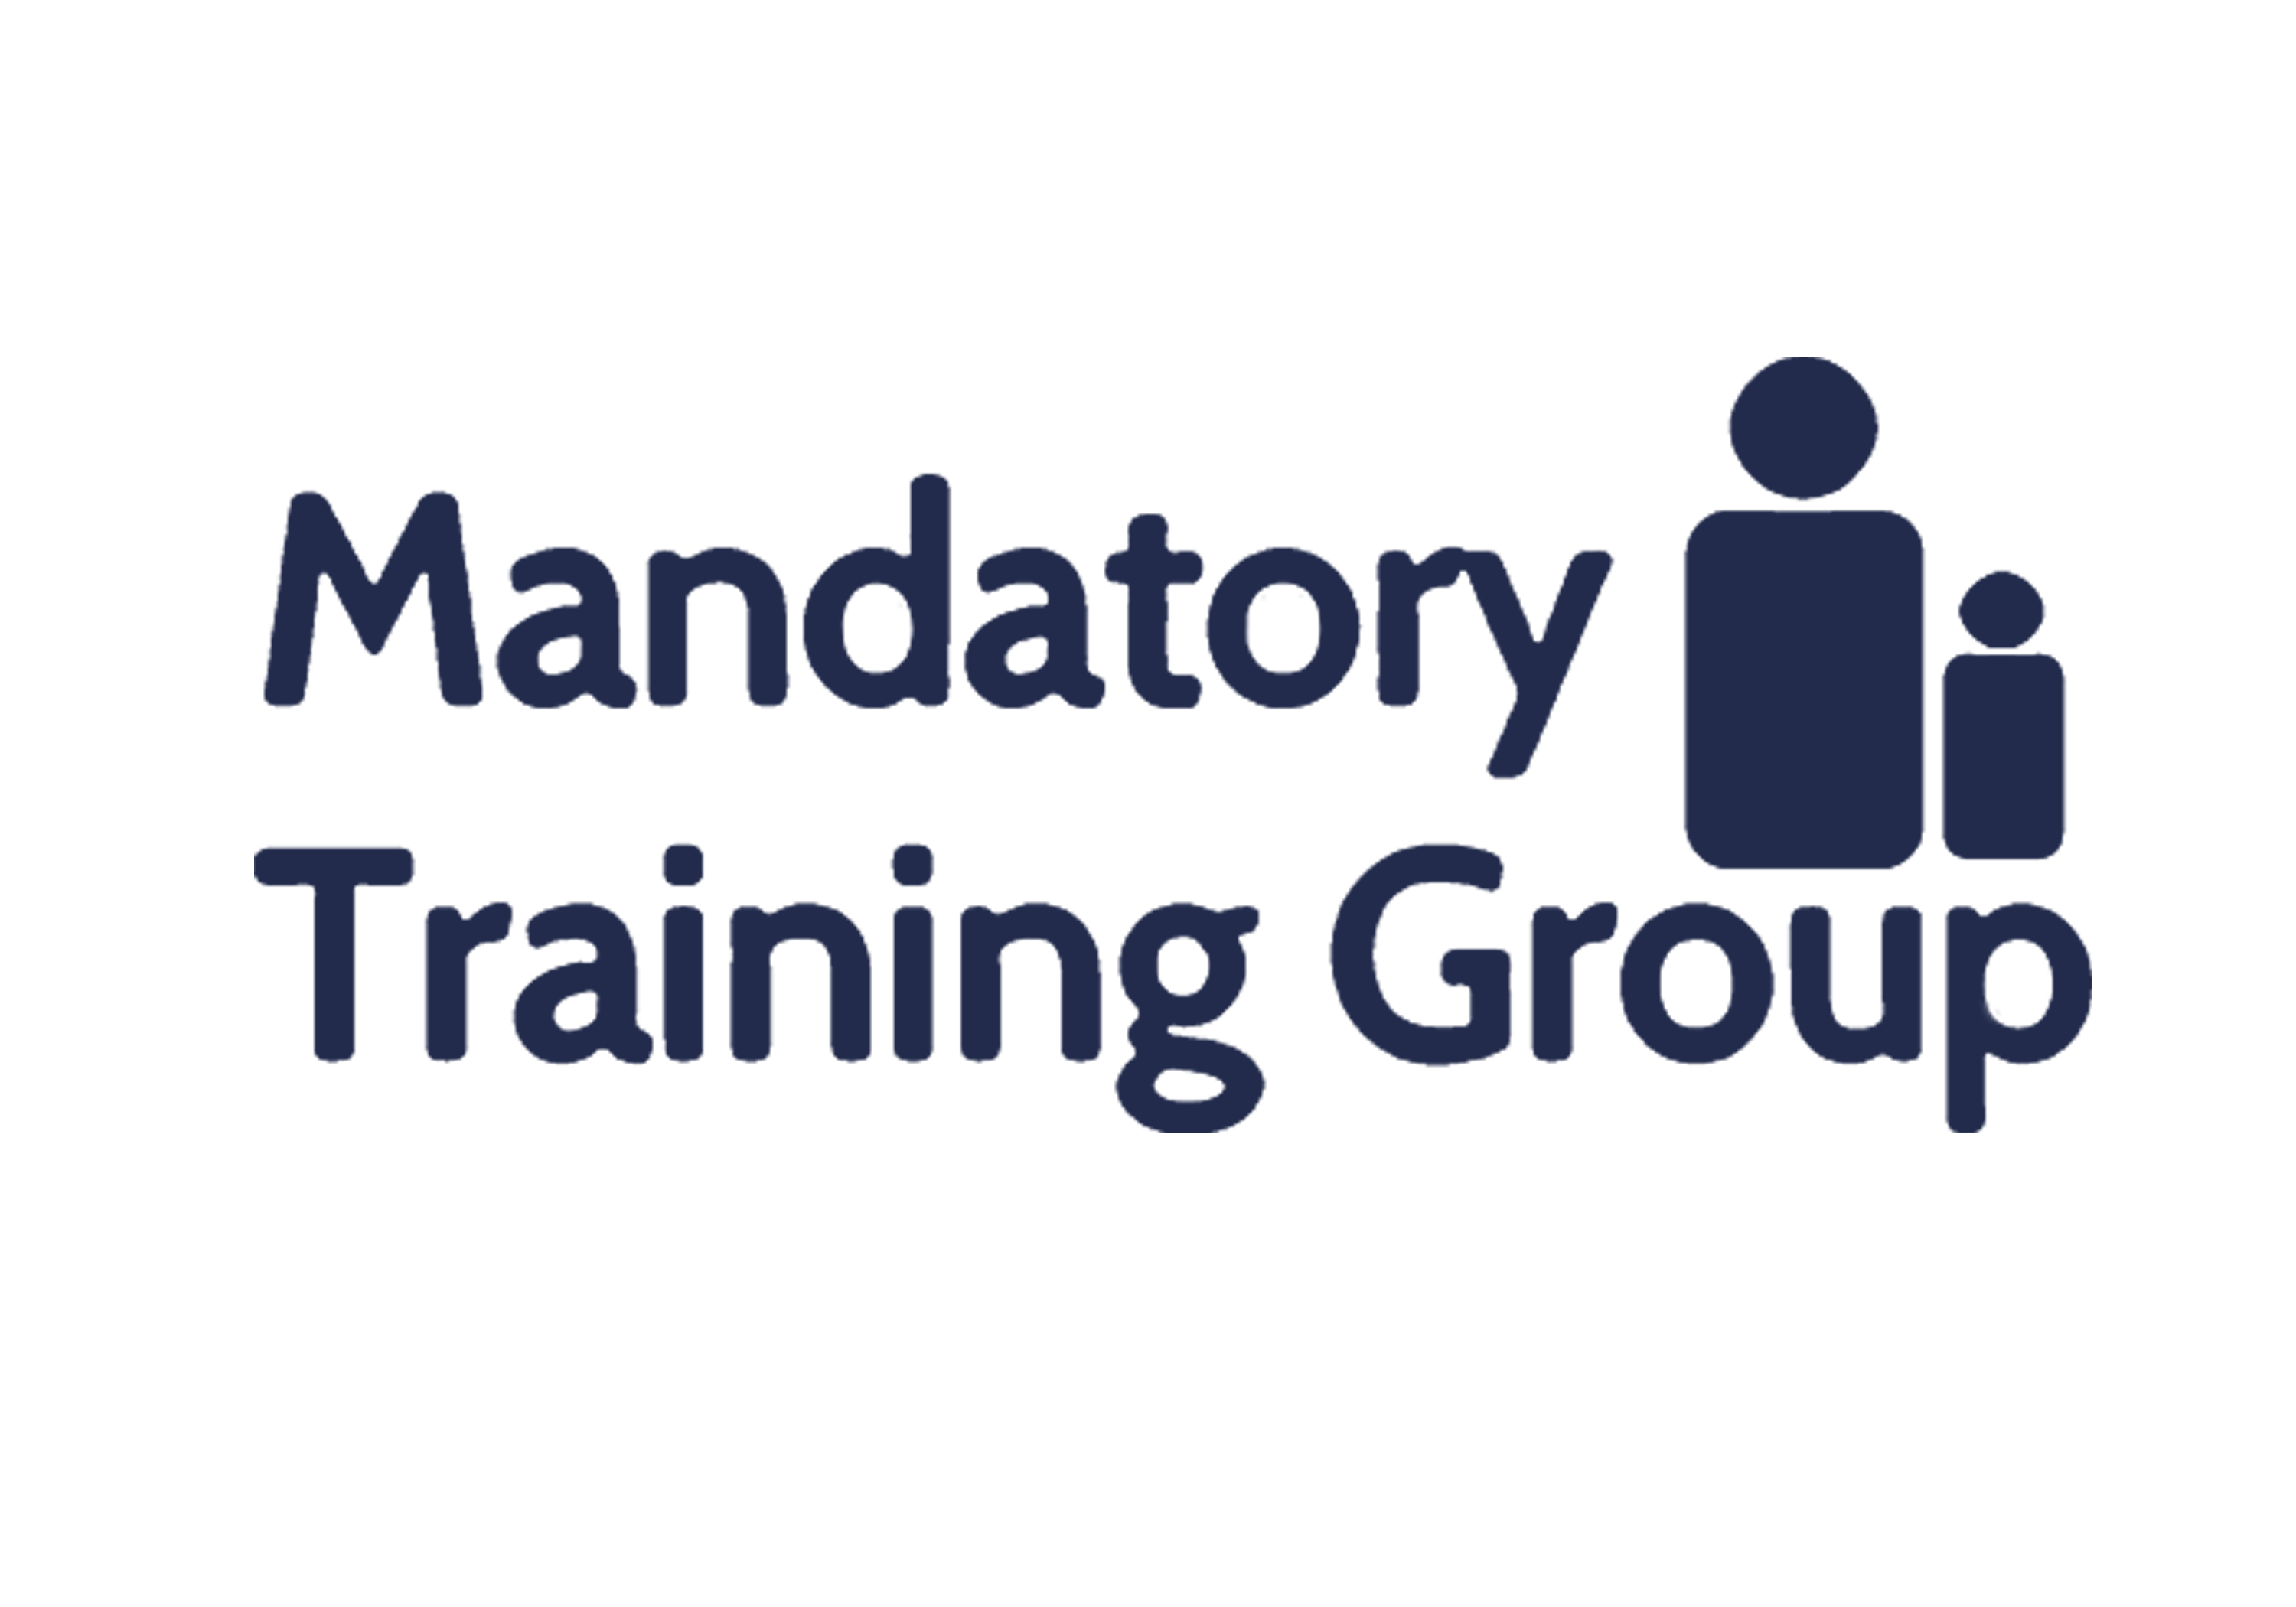 Basic Life Support Practical Training - Complyplus LMS™ - The Mandatory Training Group UK -